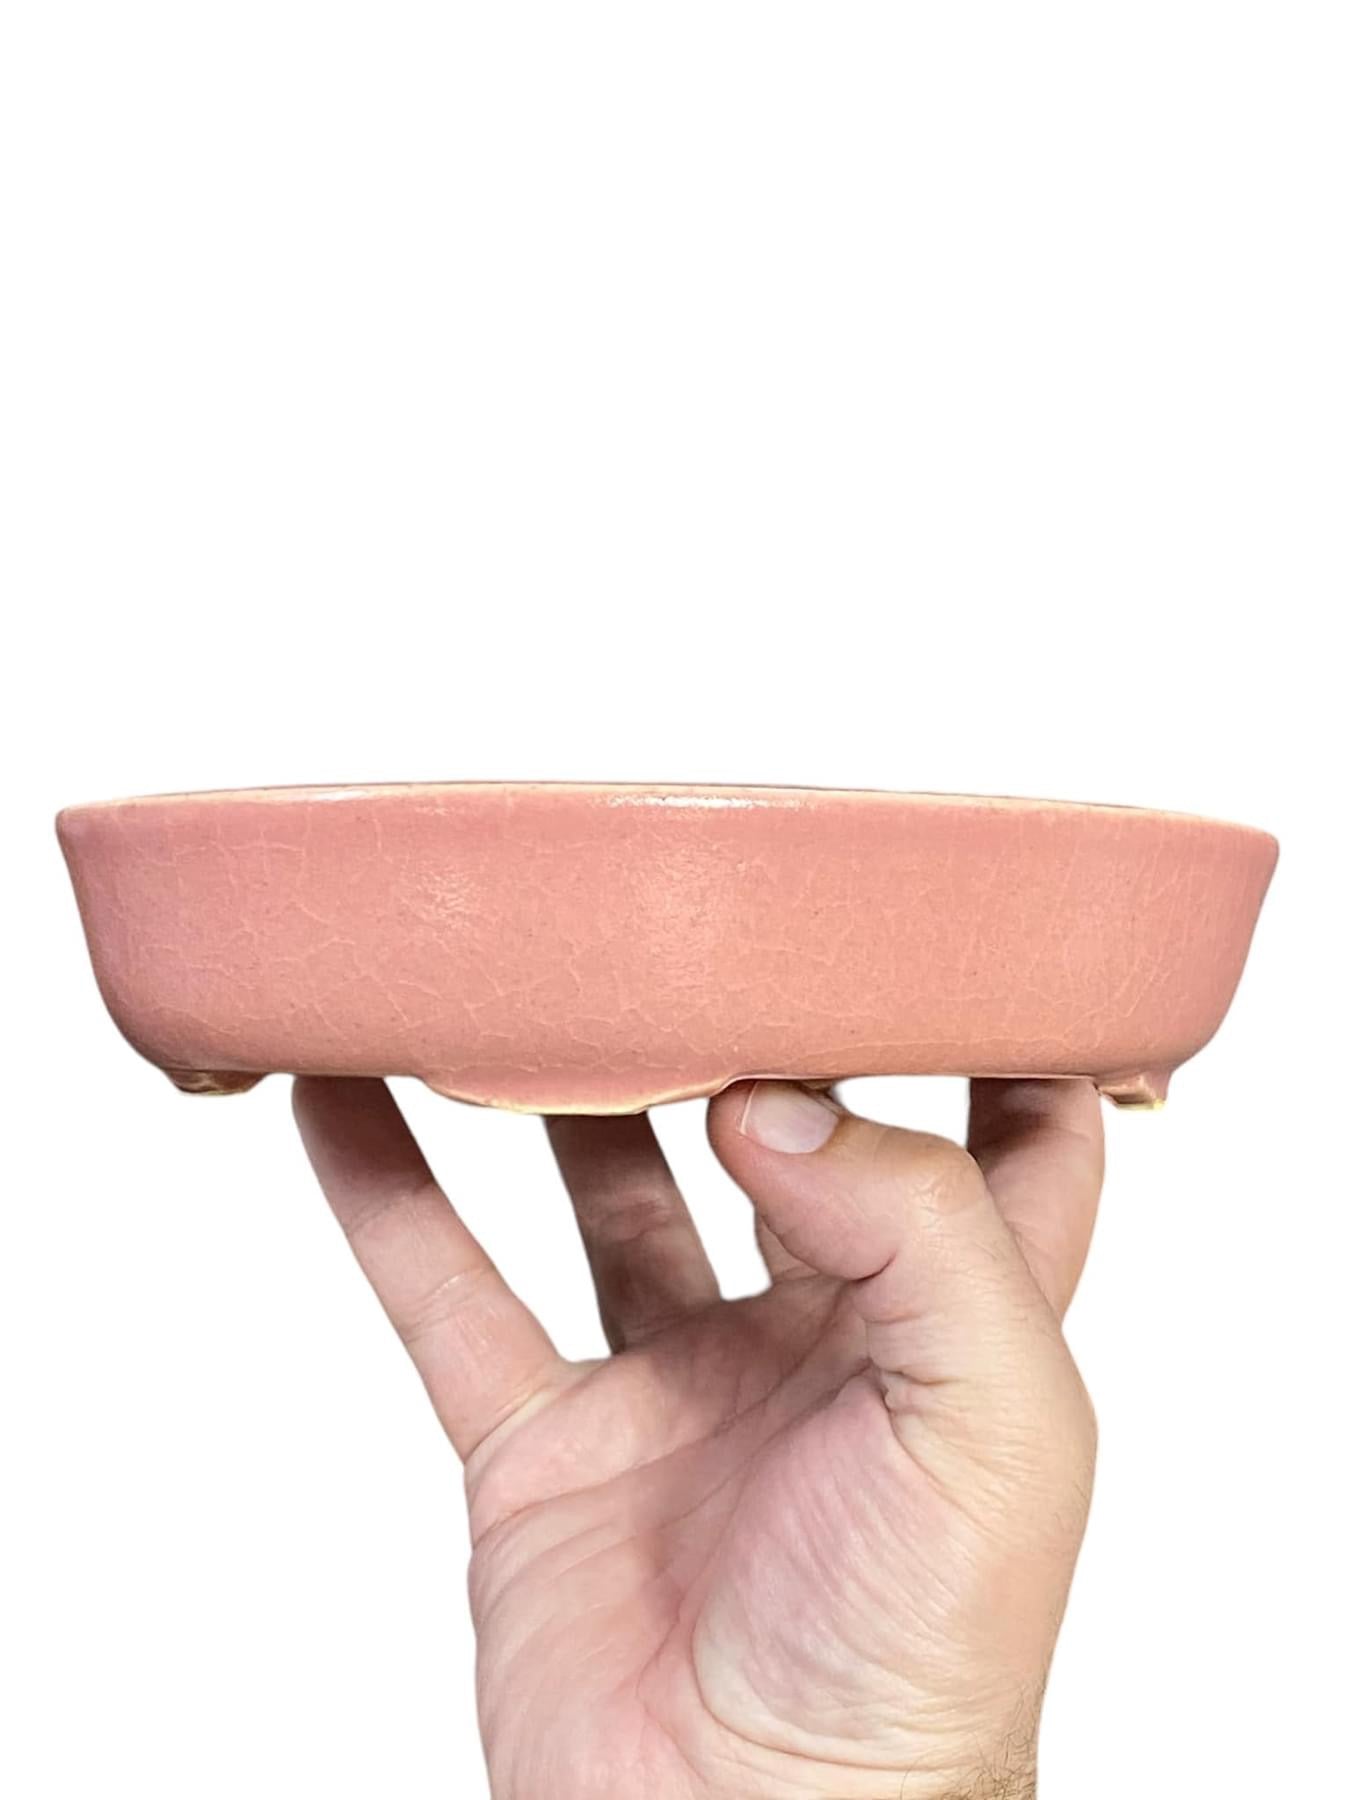 Kiyoshi Kiowai “Fuka” - Beautiful Candy Pink Glazed Bonsai Pot (7-7/8” wide)